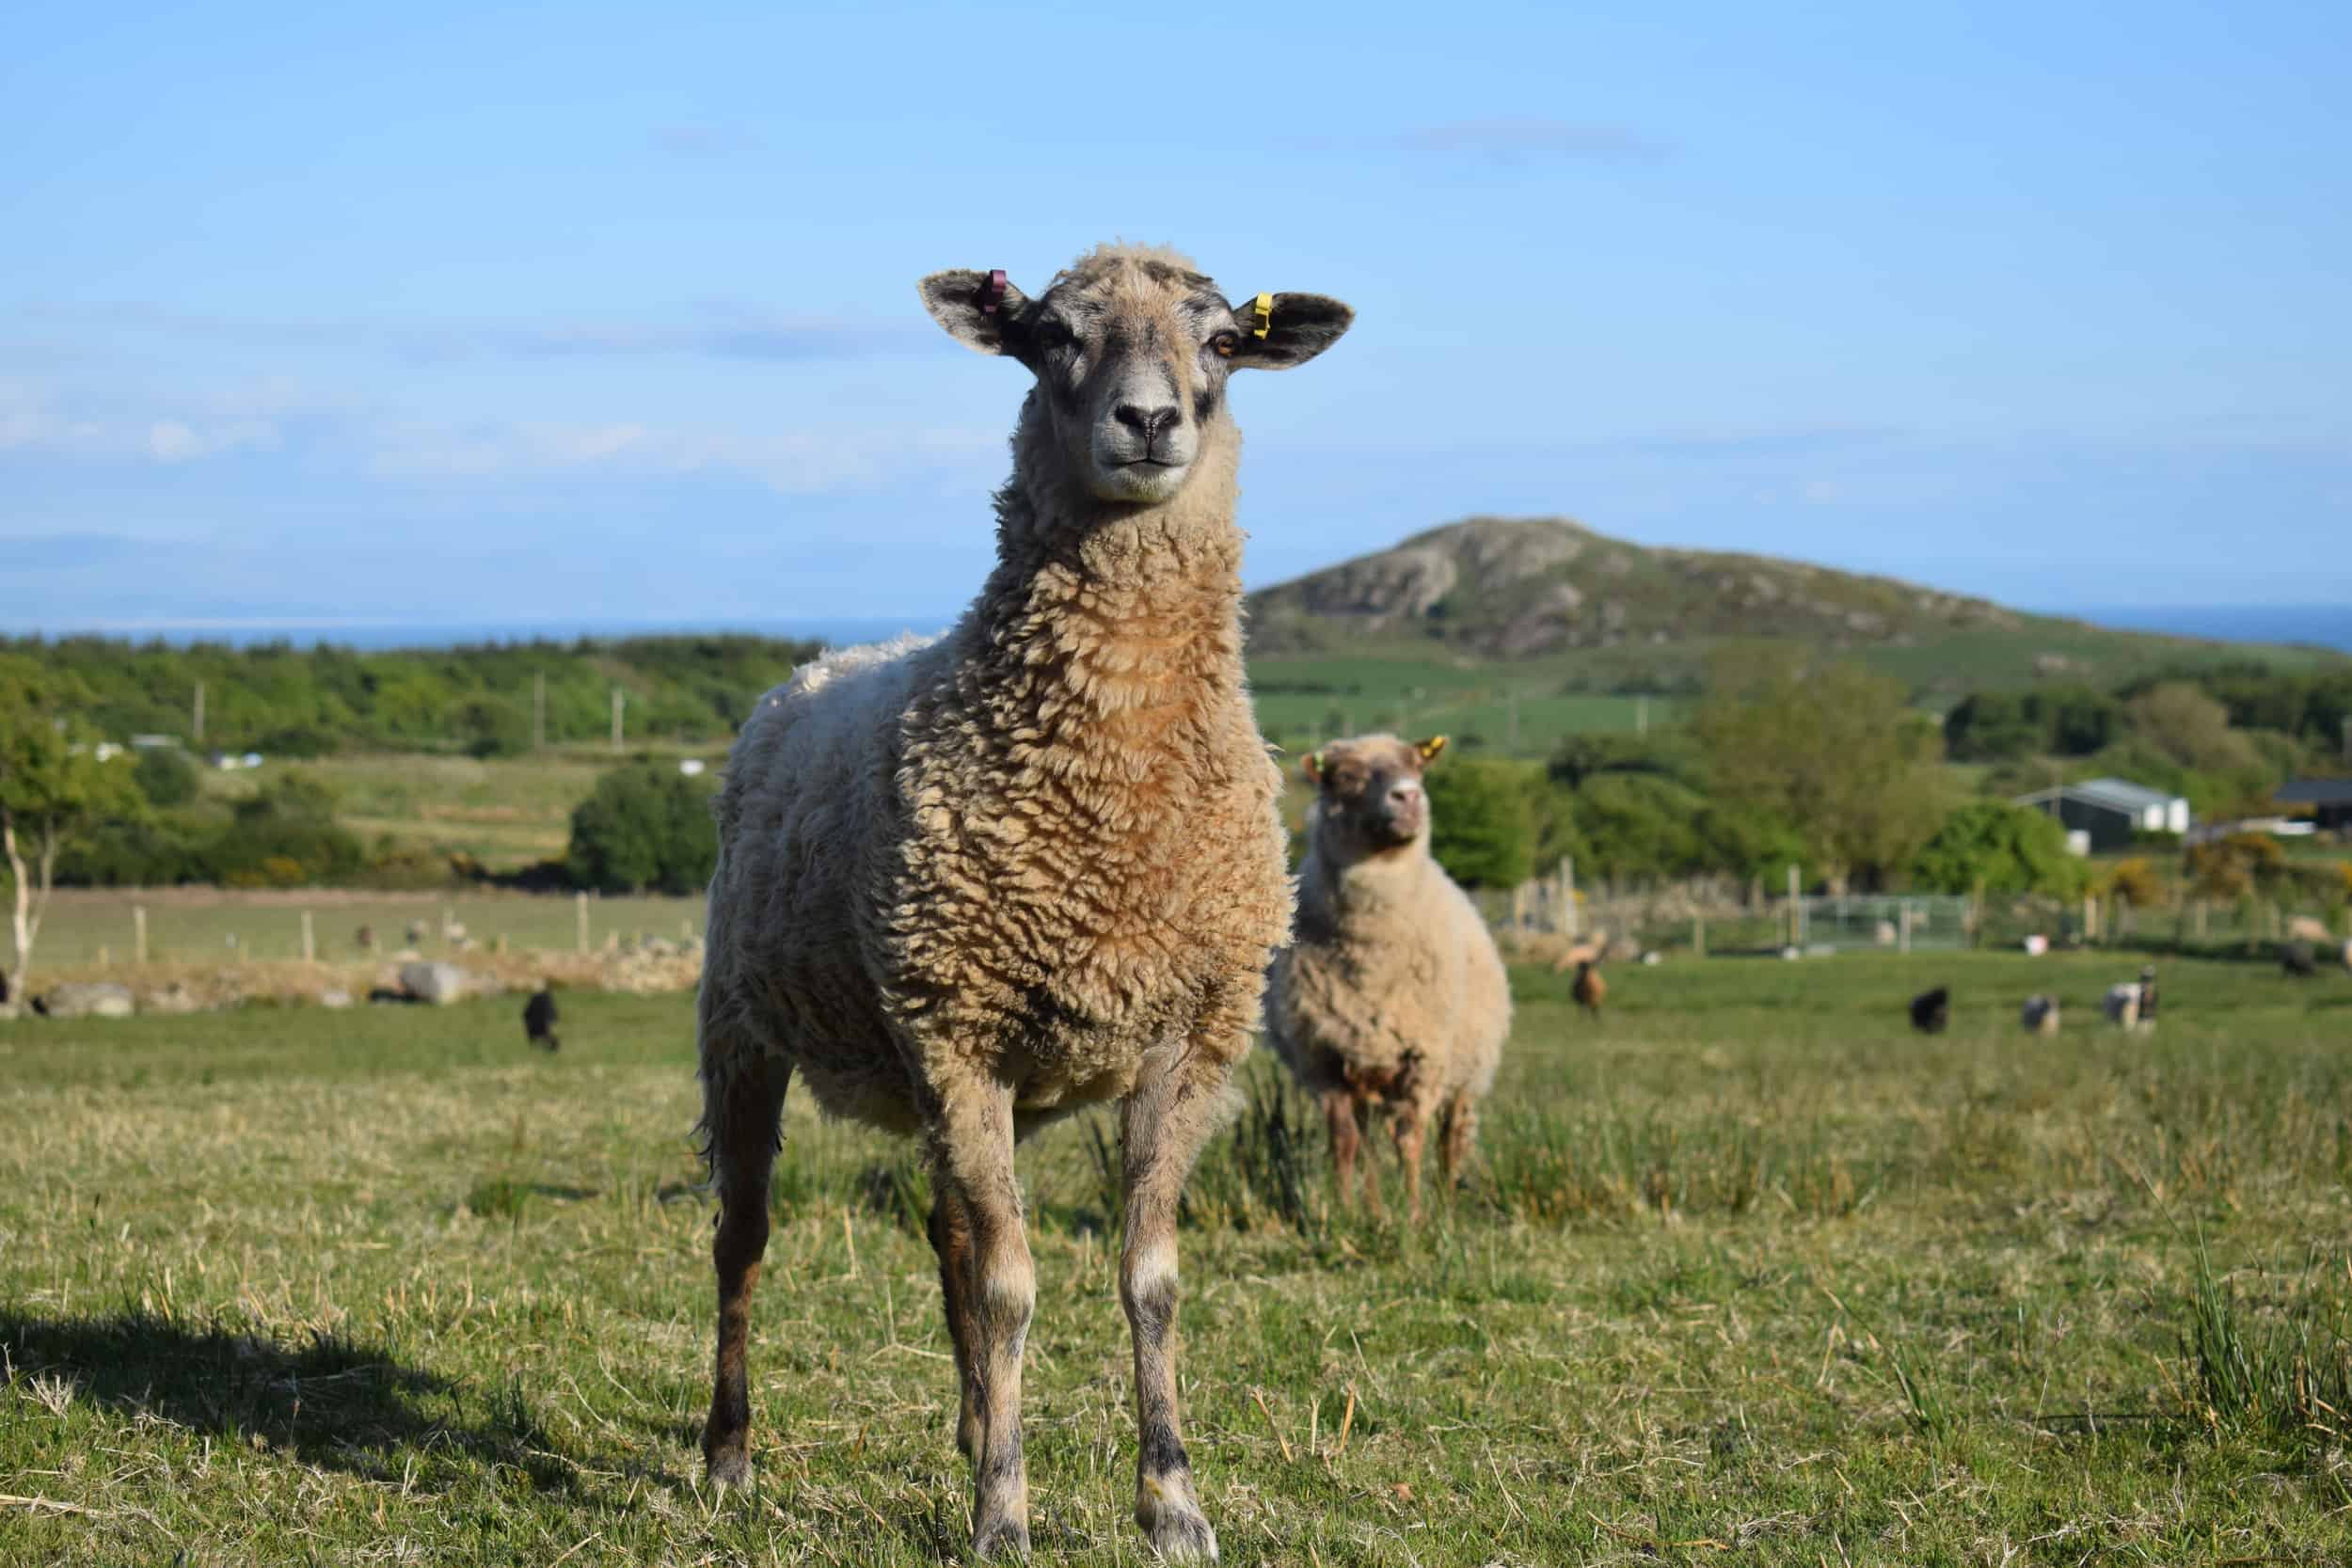 jemima crossbreed sheep beautiful ewe coloured leicester longwool cross gotland shetland sheep